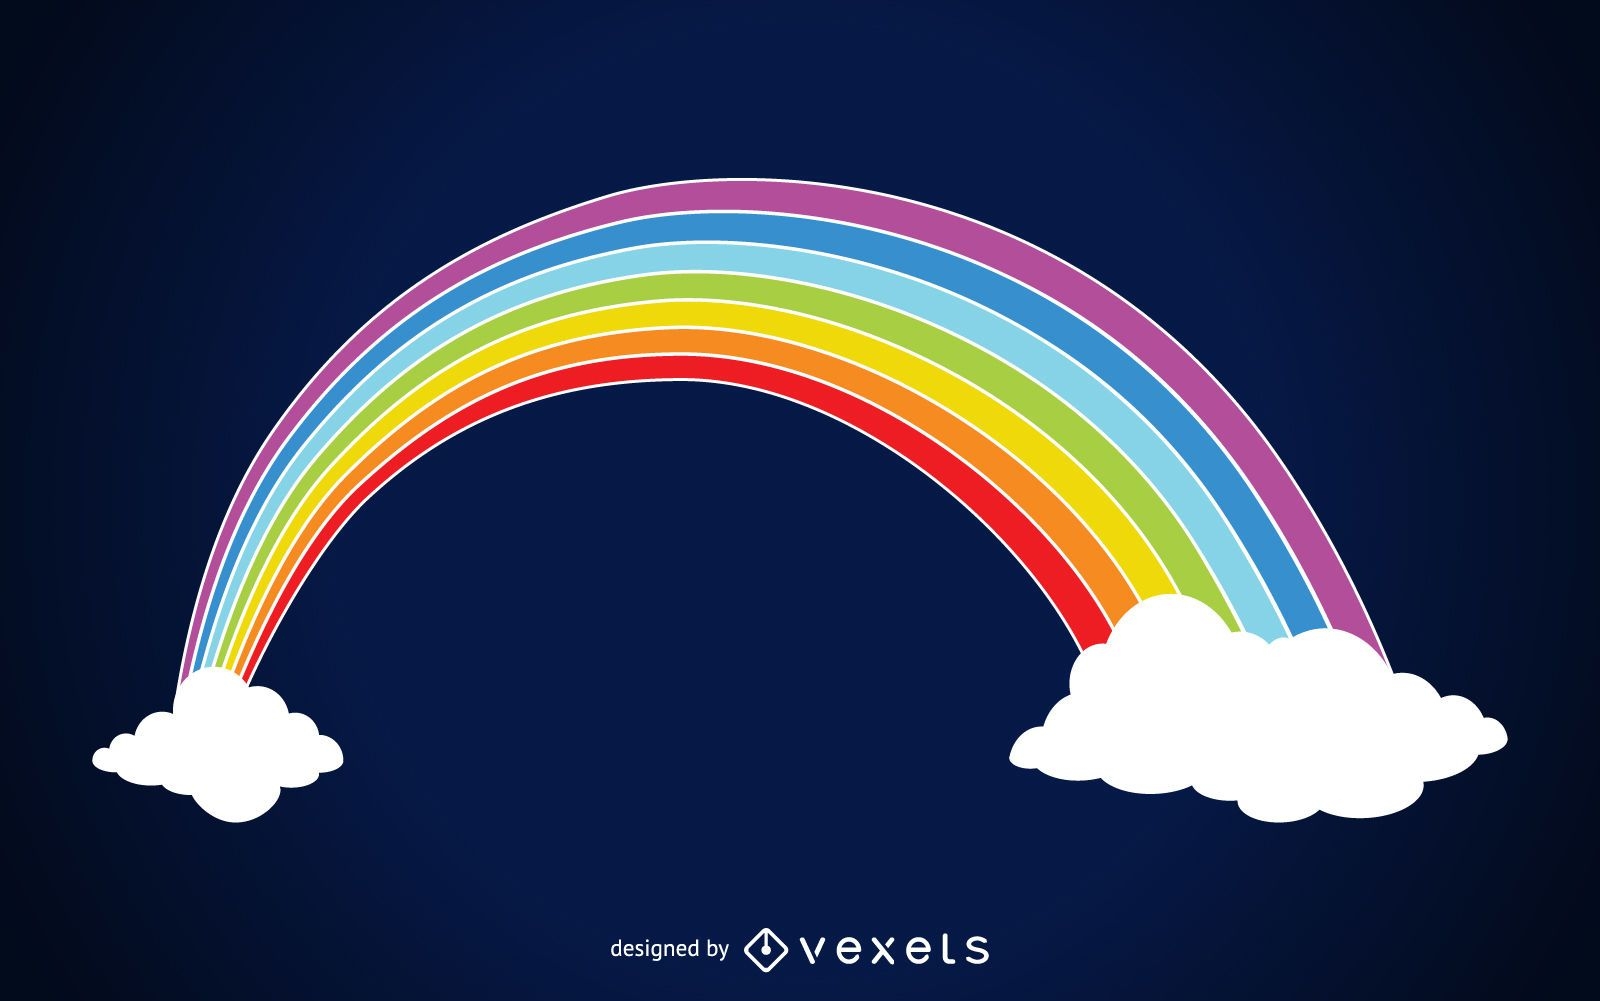 Rainbow on clouds illustration